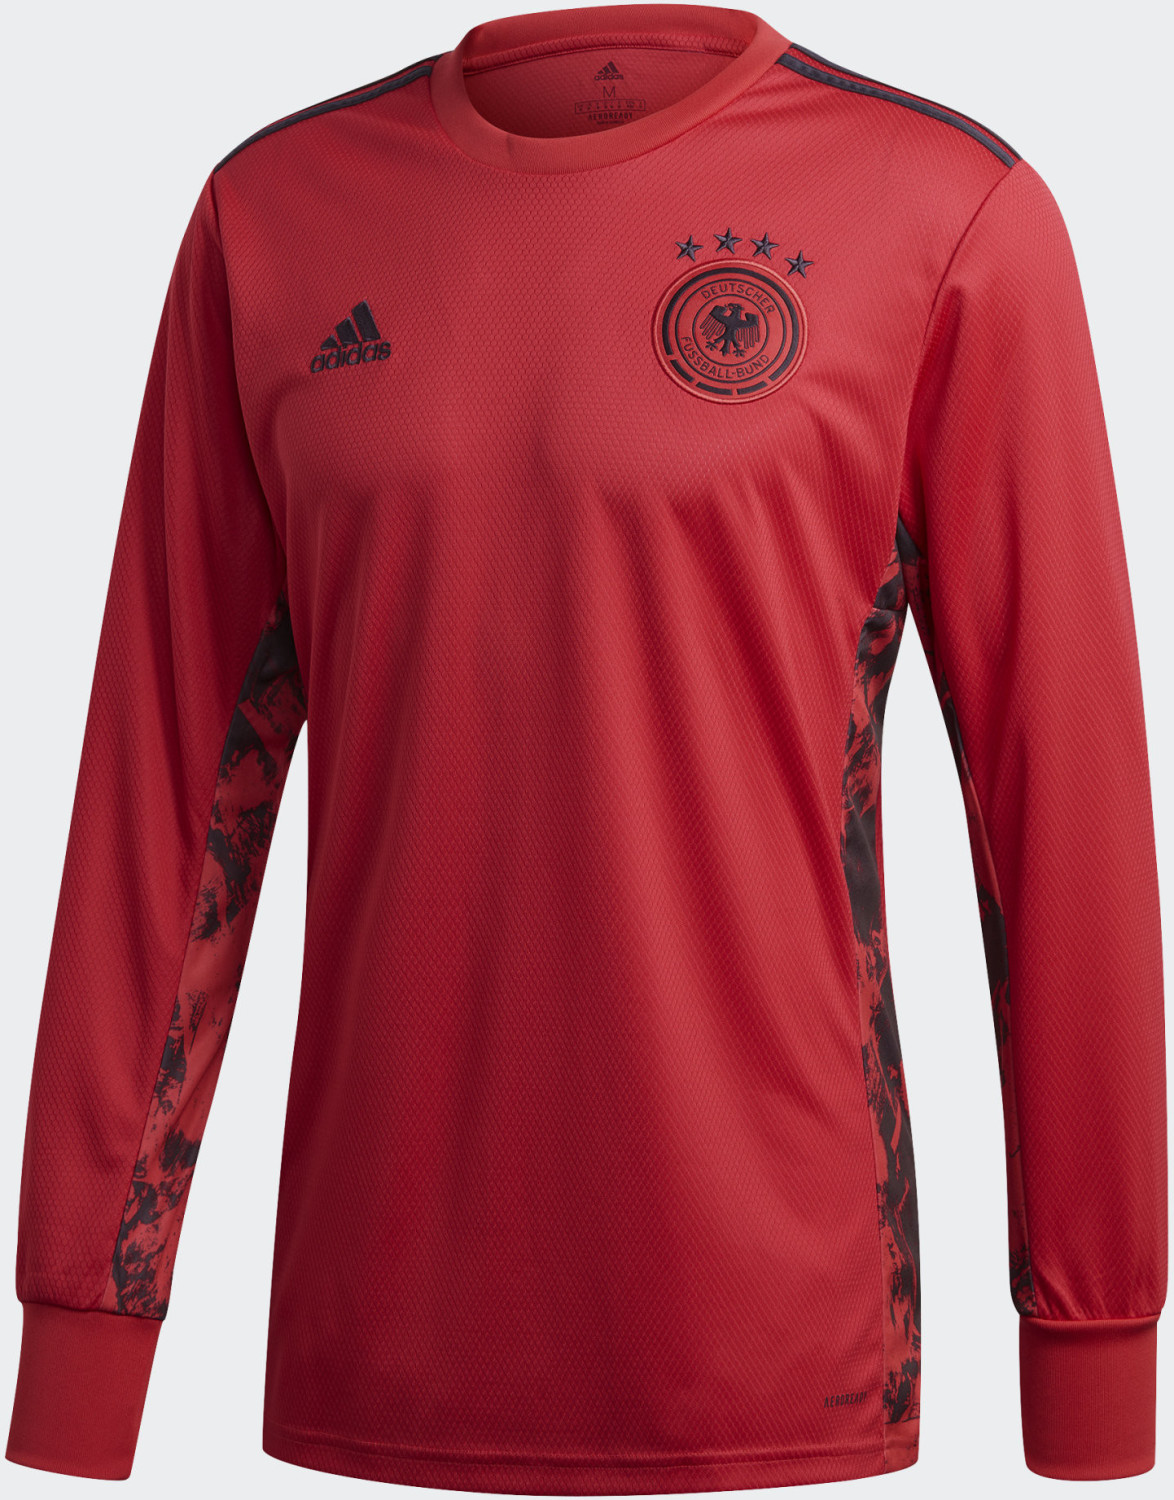 Adidas Germany Home Goalkeeper Shirt 2020